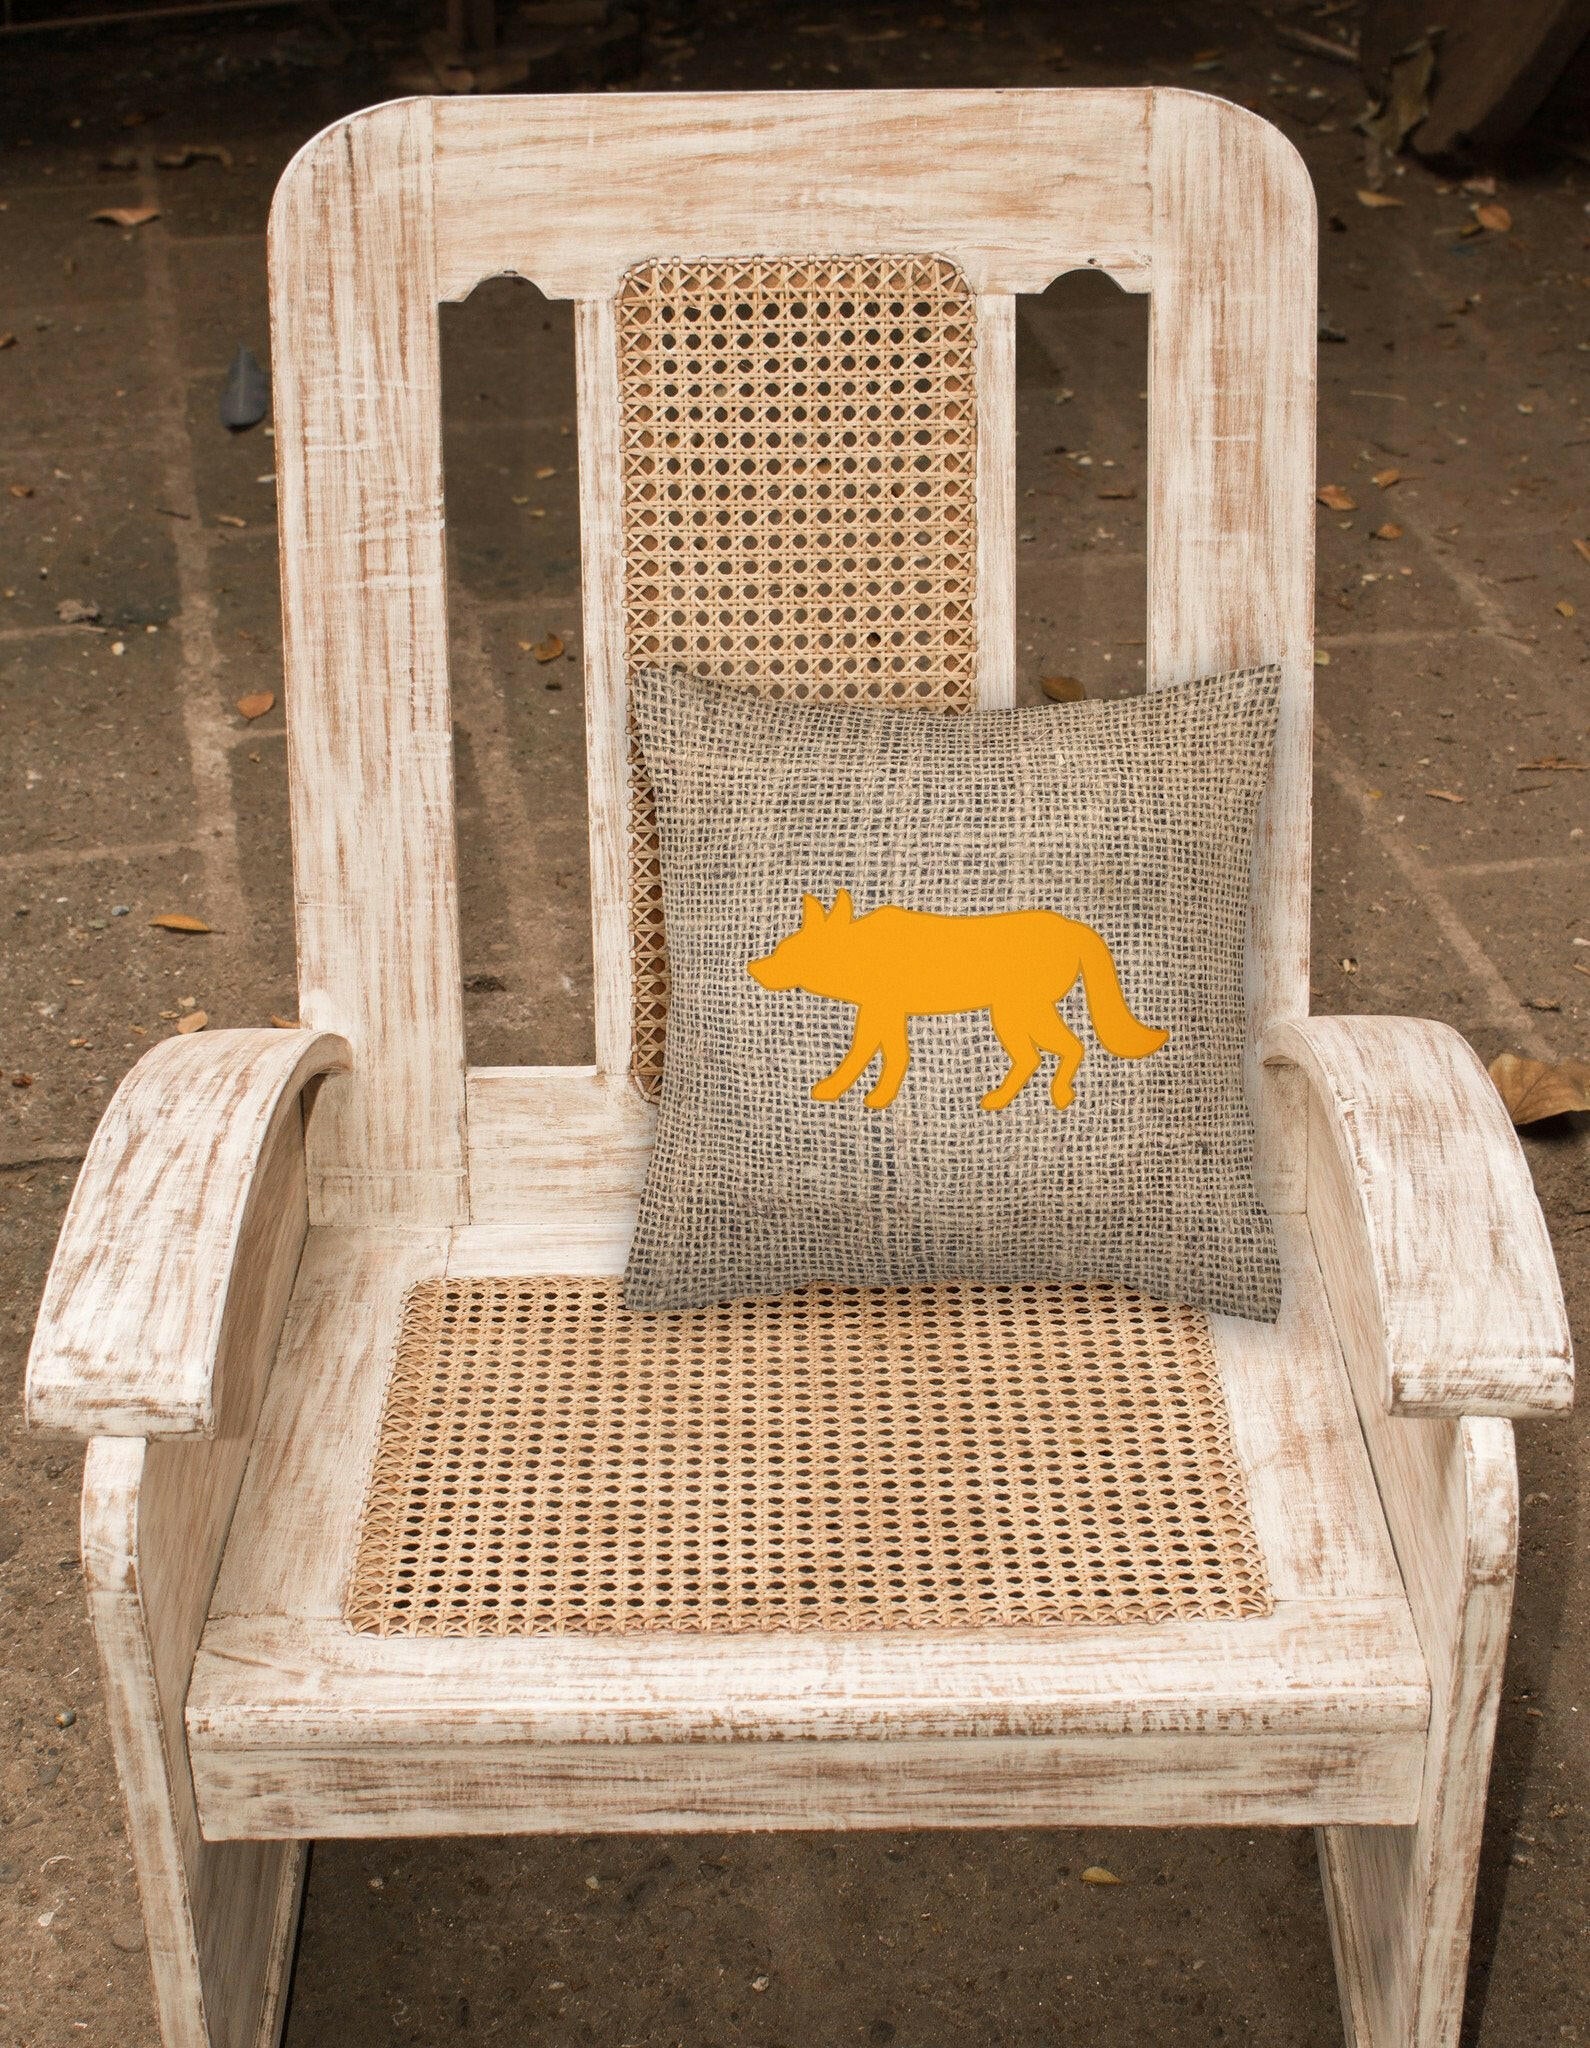 Wolf Burlap and Orange   Canvas Fabric Decorative Pillow BB1123 - the-store.com